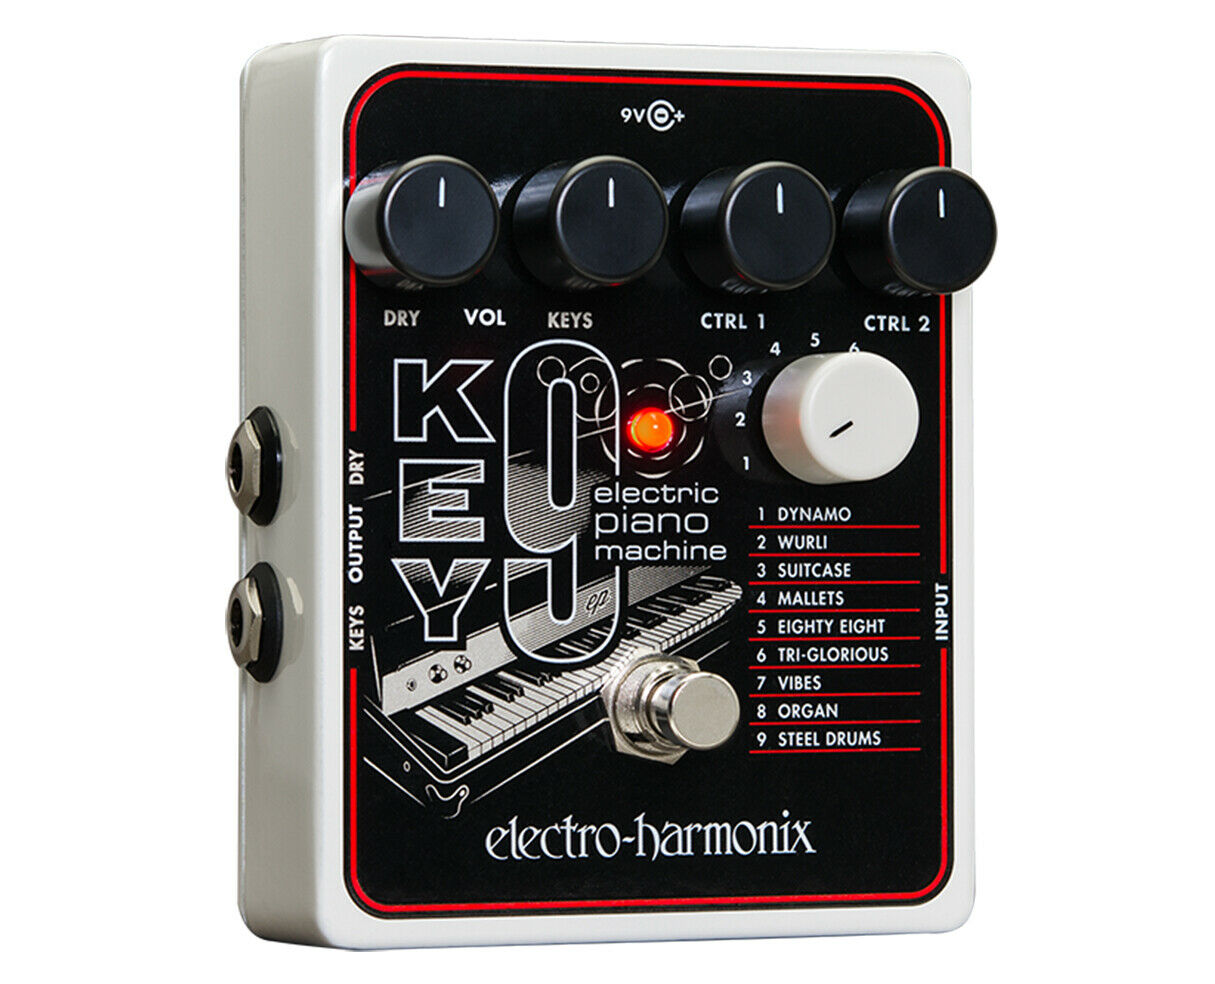 Electro-harmonix Key9 Electric Piano Machine Guitar Pedal -